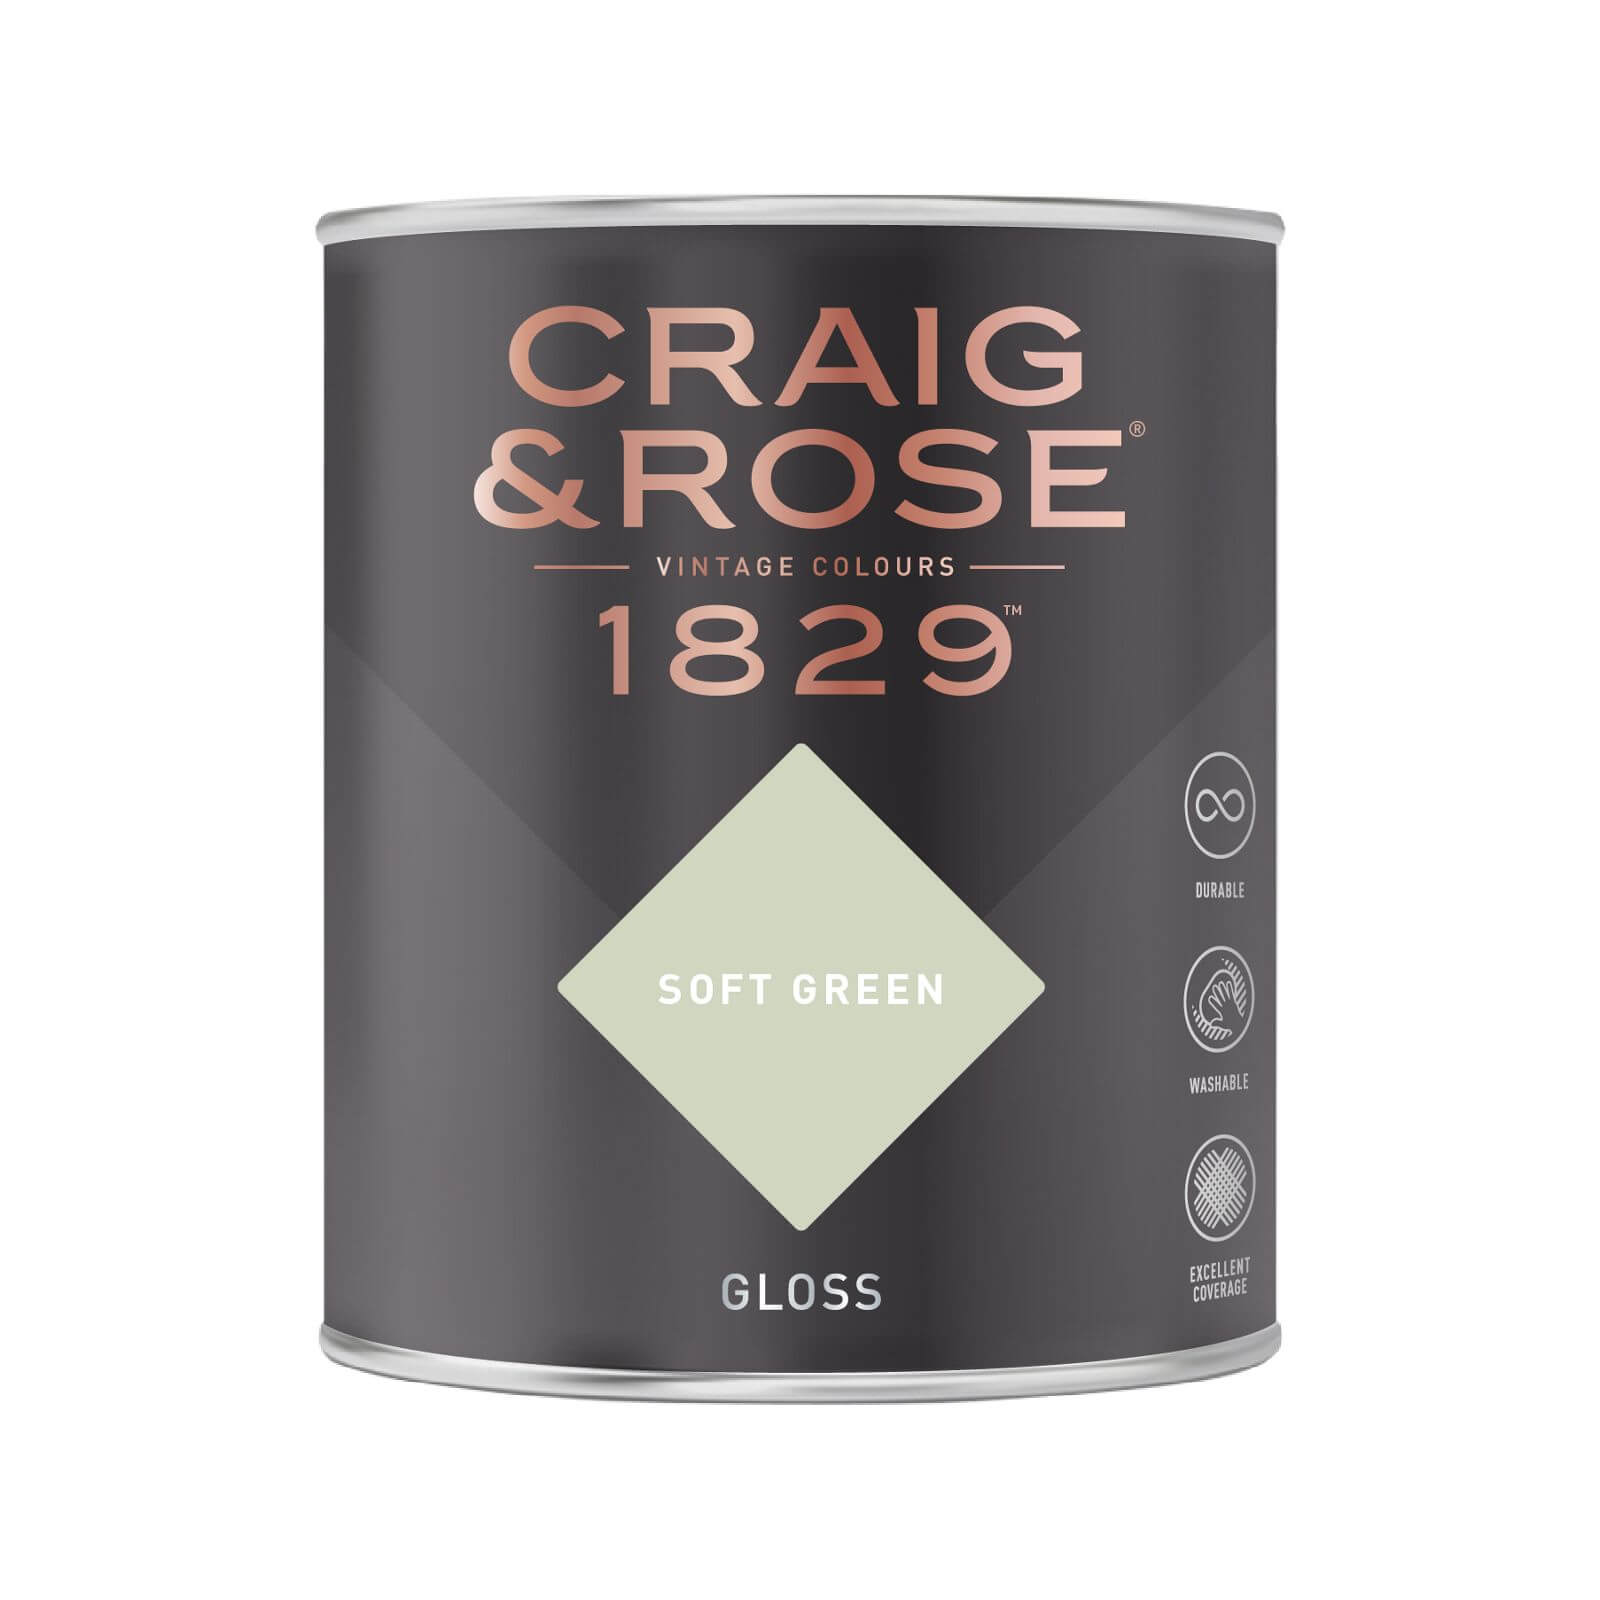 Craig & Rose 1829 Gloss Paint Soft Green - 750ml